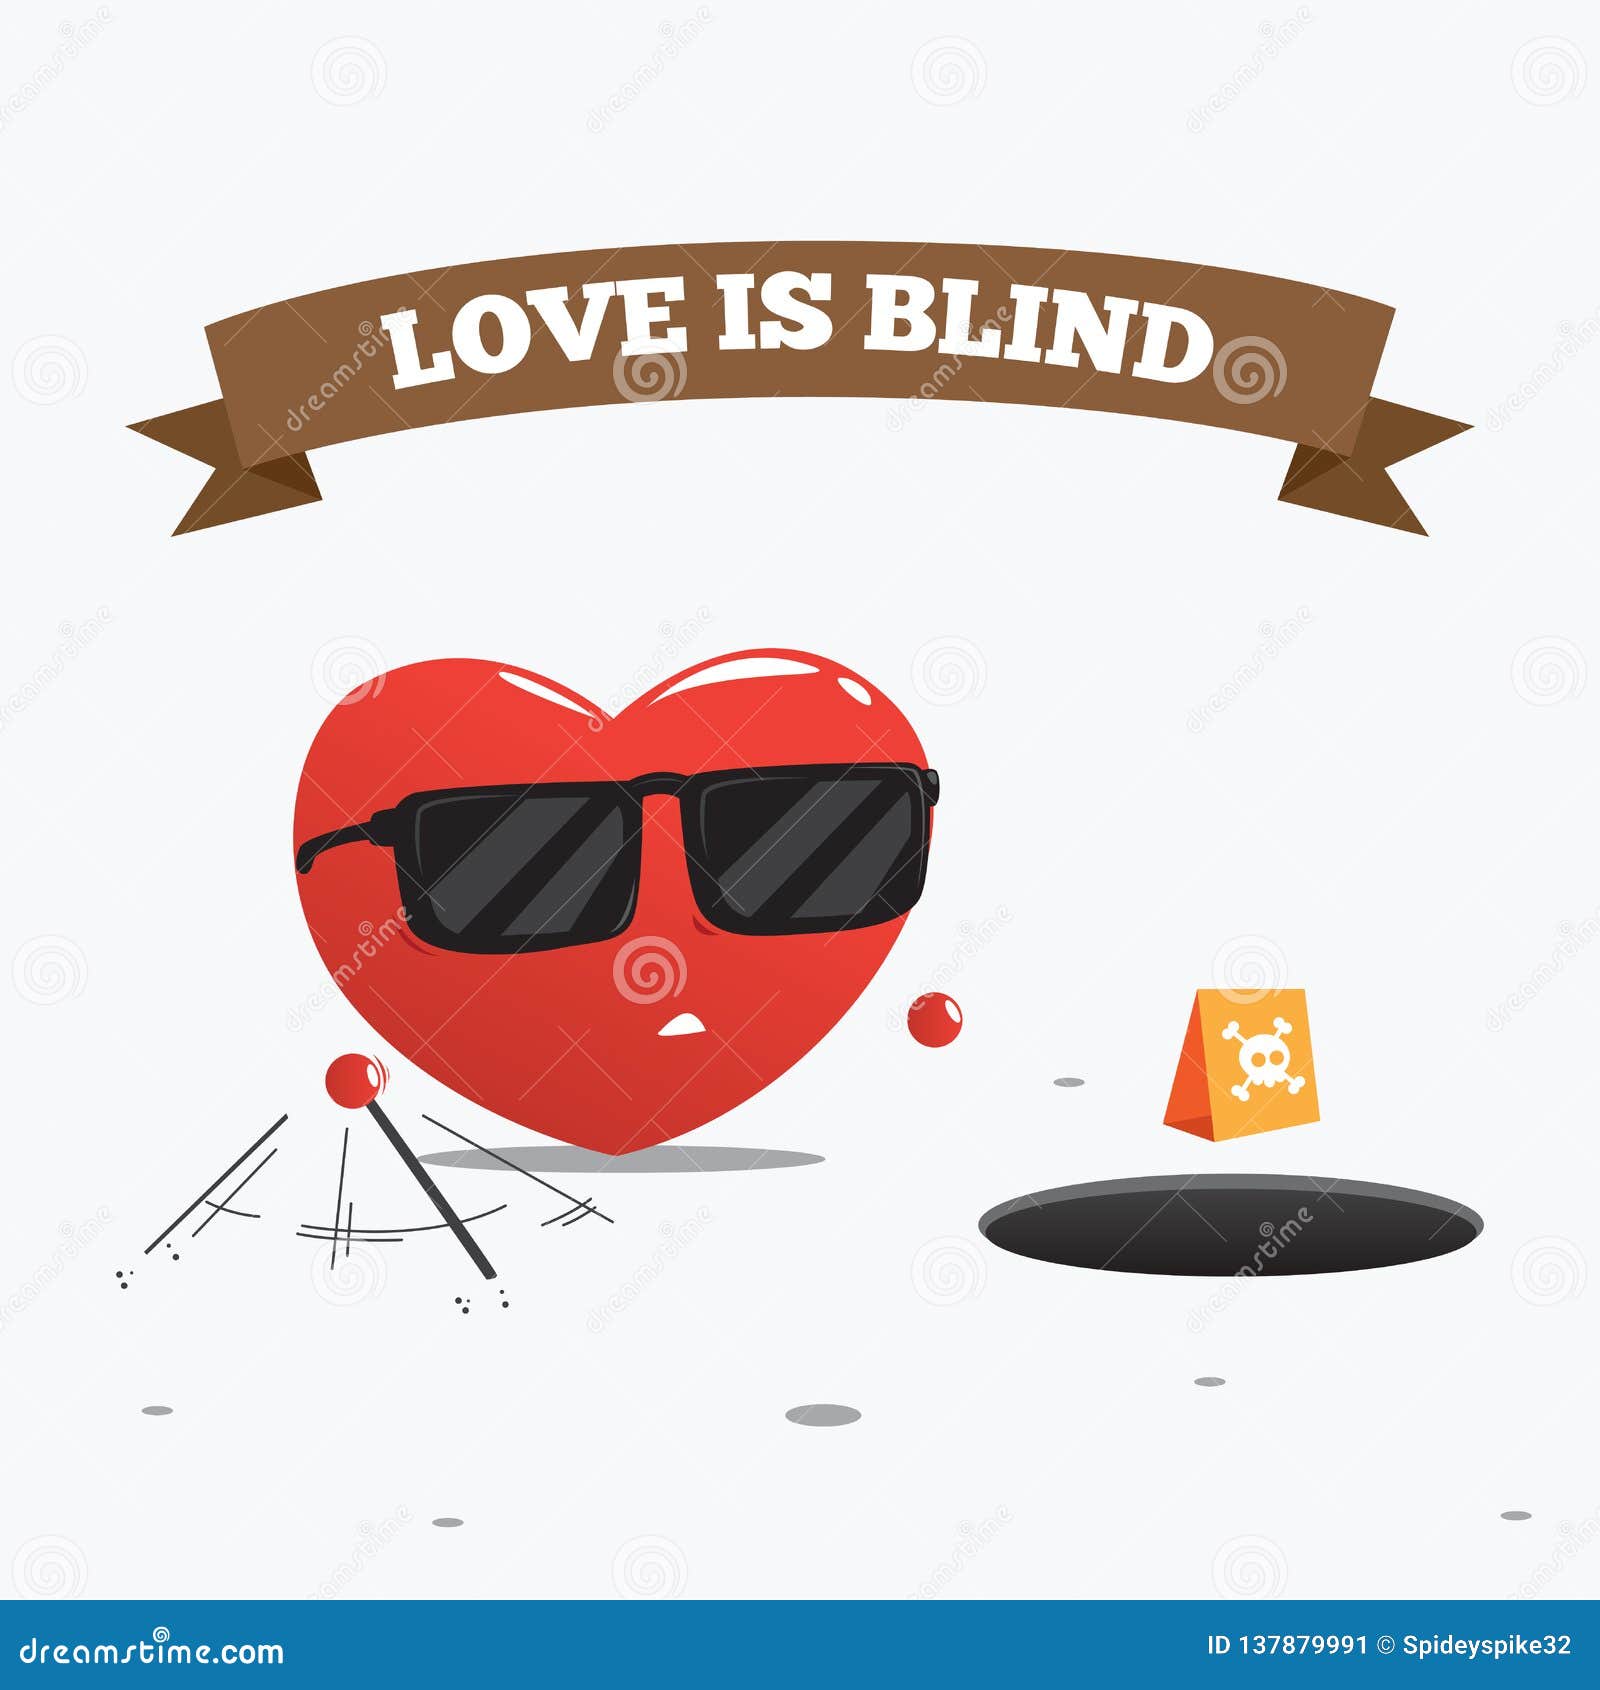 Is blind onlyfans love LoveIsBlindOnNetflix